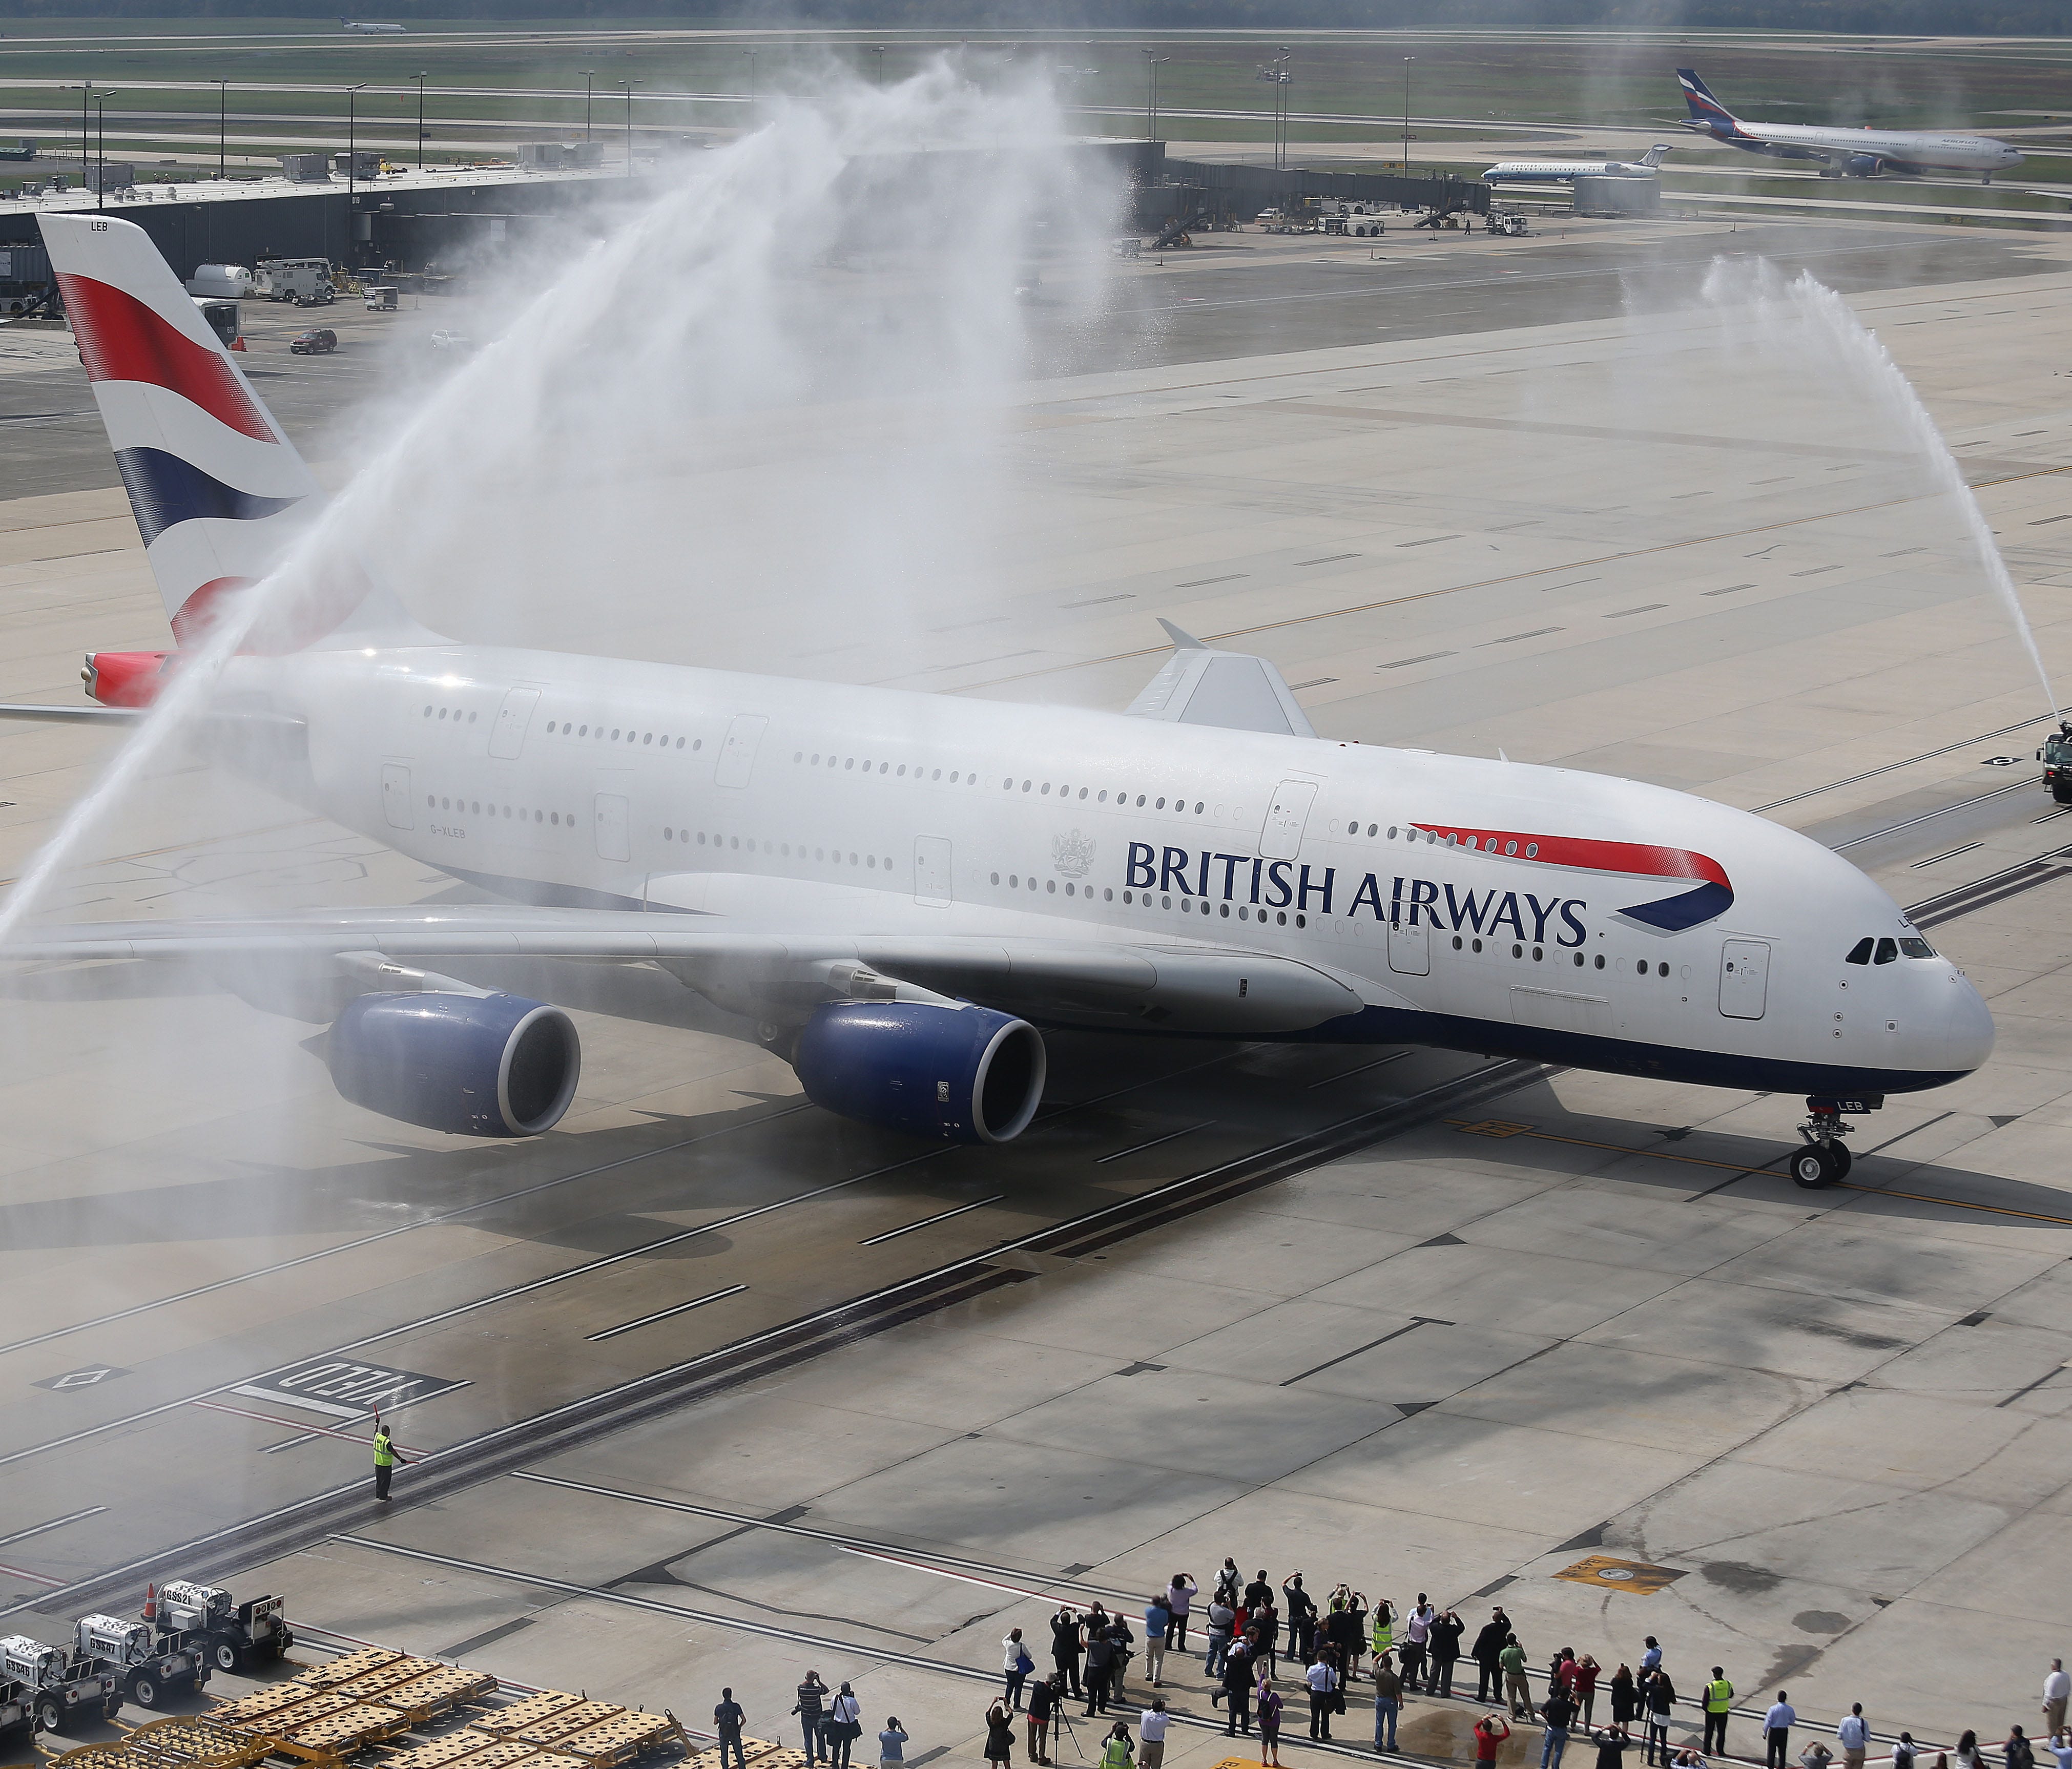 British Airways' first A380 flight to Washington arrives Dulles International Airport on Oct. 2, 2014.